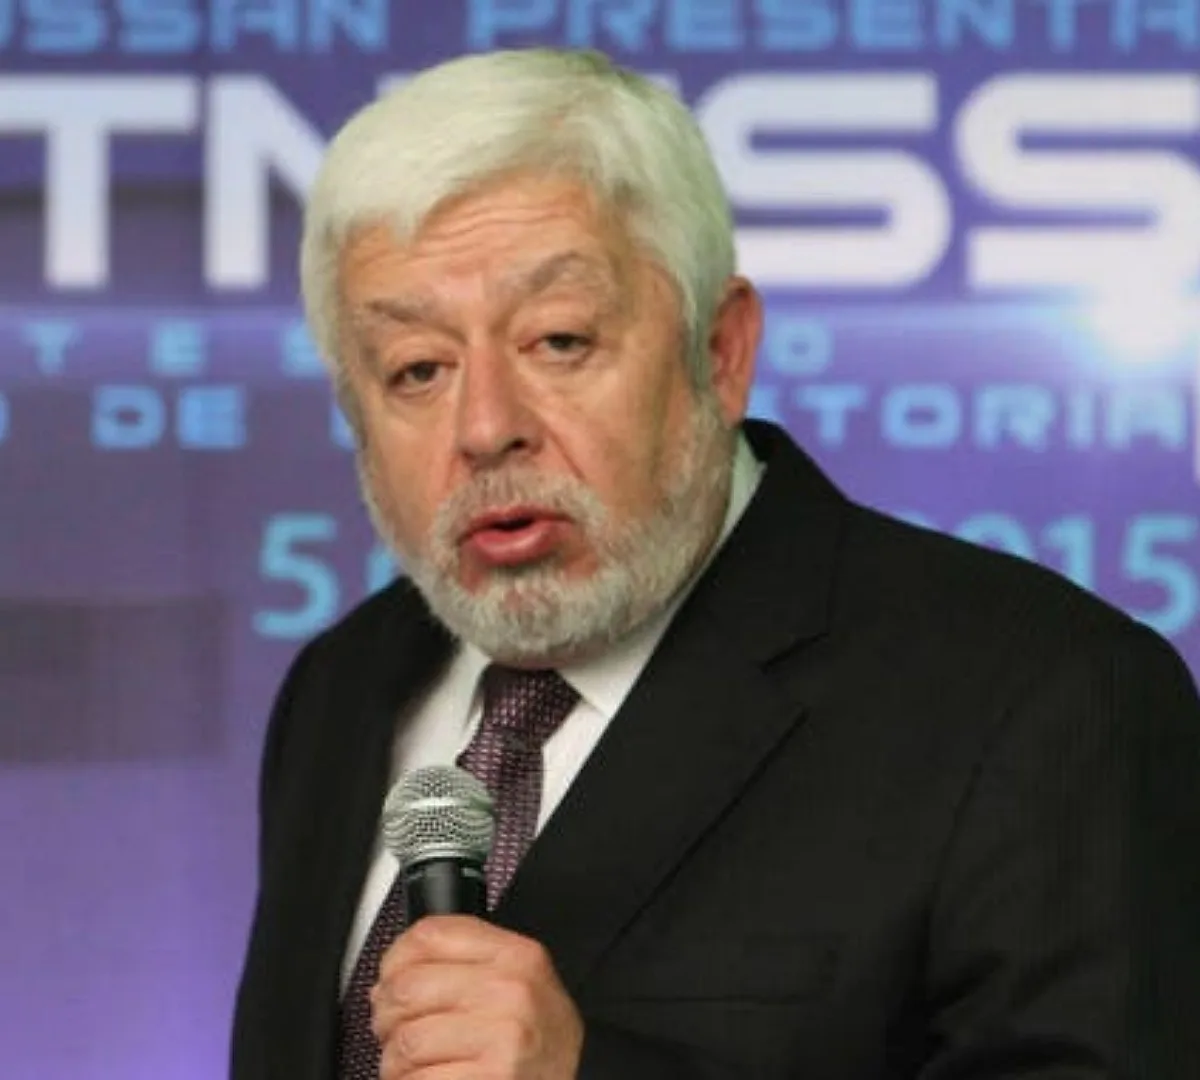 Meet Jaime Maussan: Unveiler of ‘Alien Corpses’ at Mexico Congress